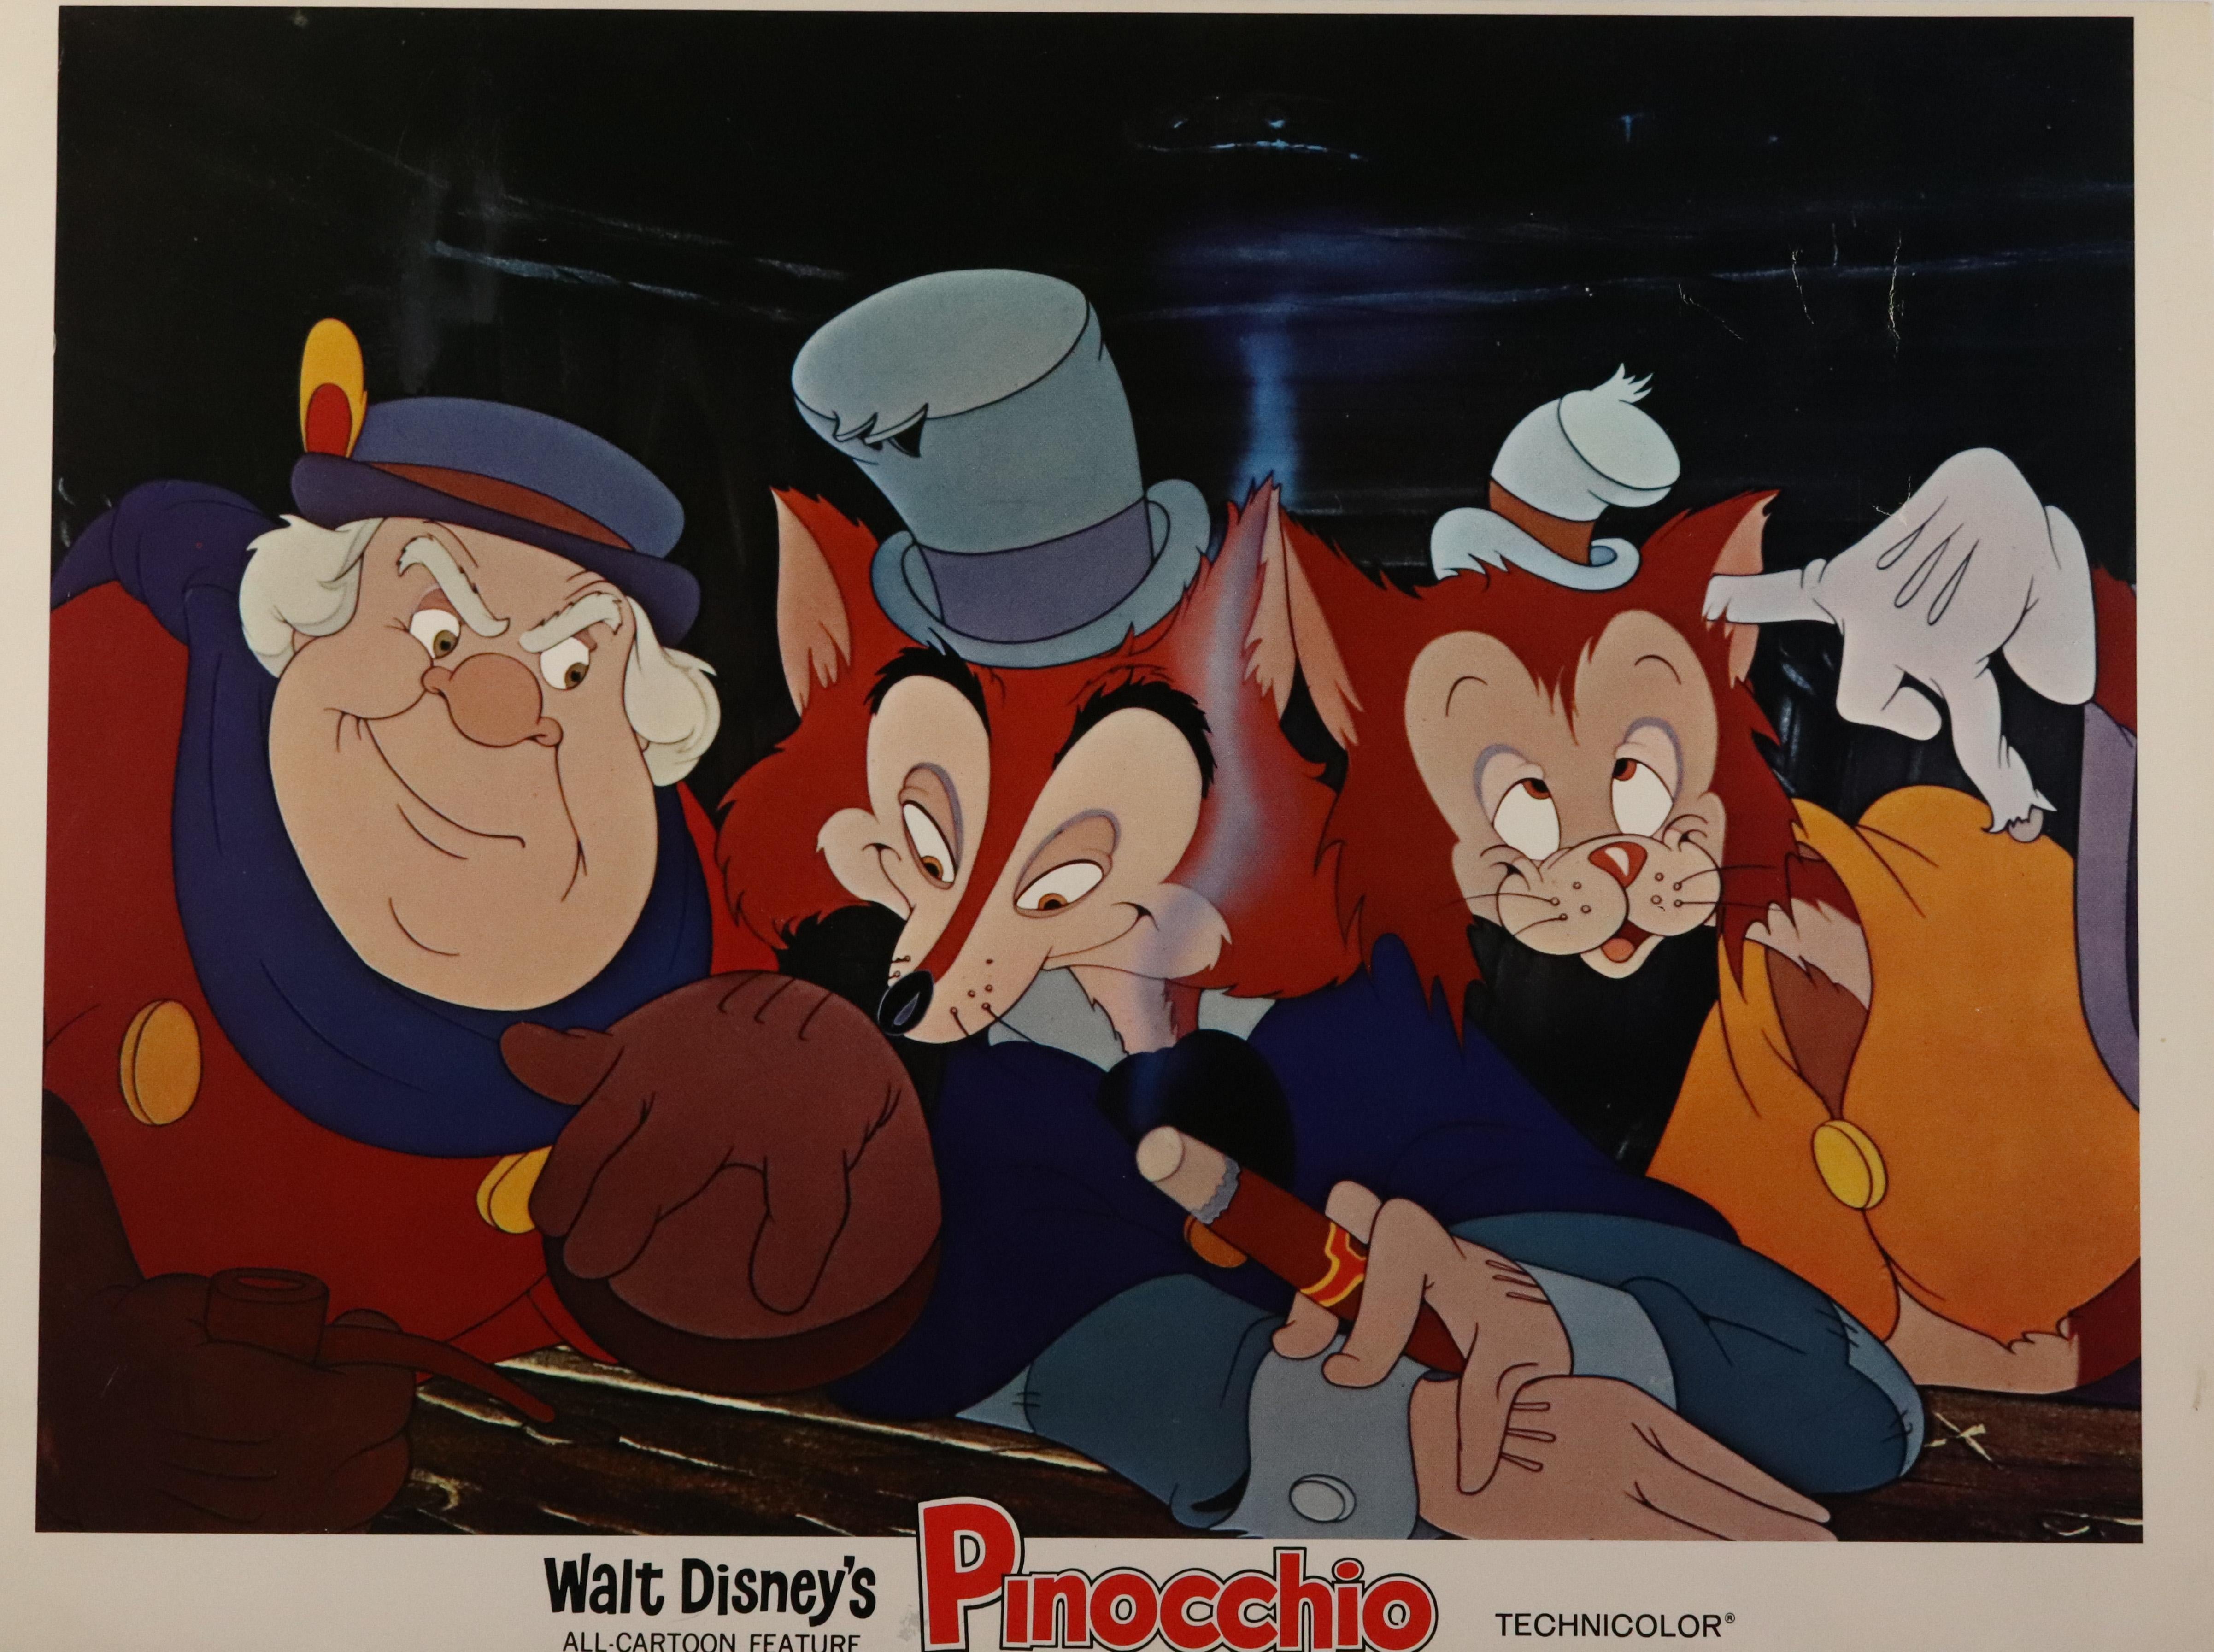 Unknown Interior Print - "Walt Disney's Pinocchio" Lobby Card, USA 1940